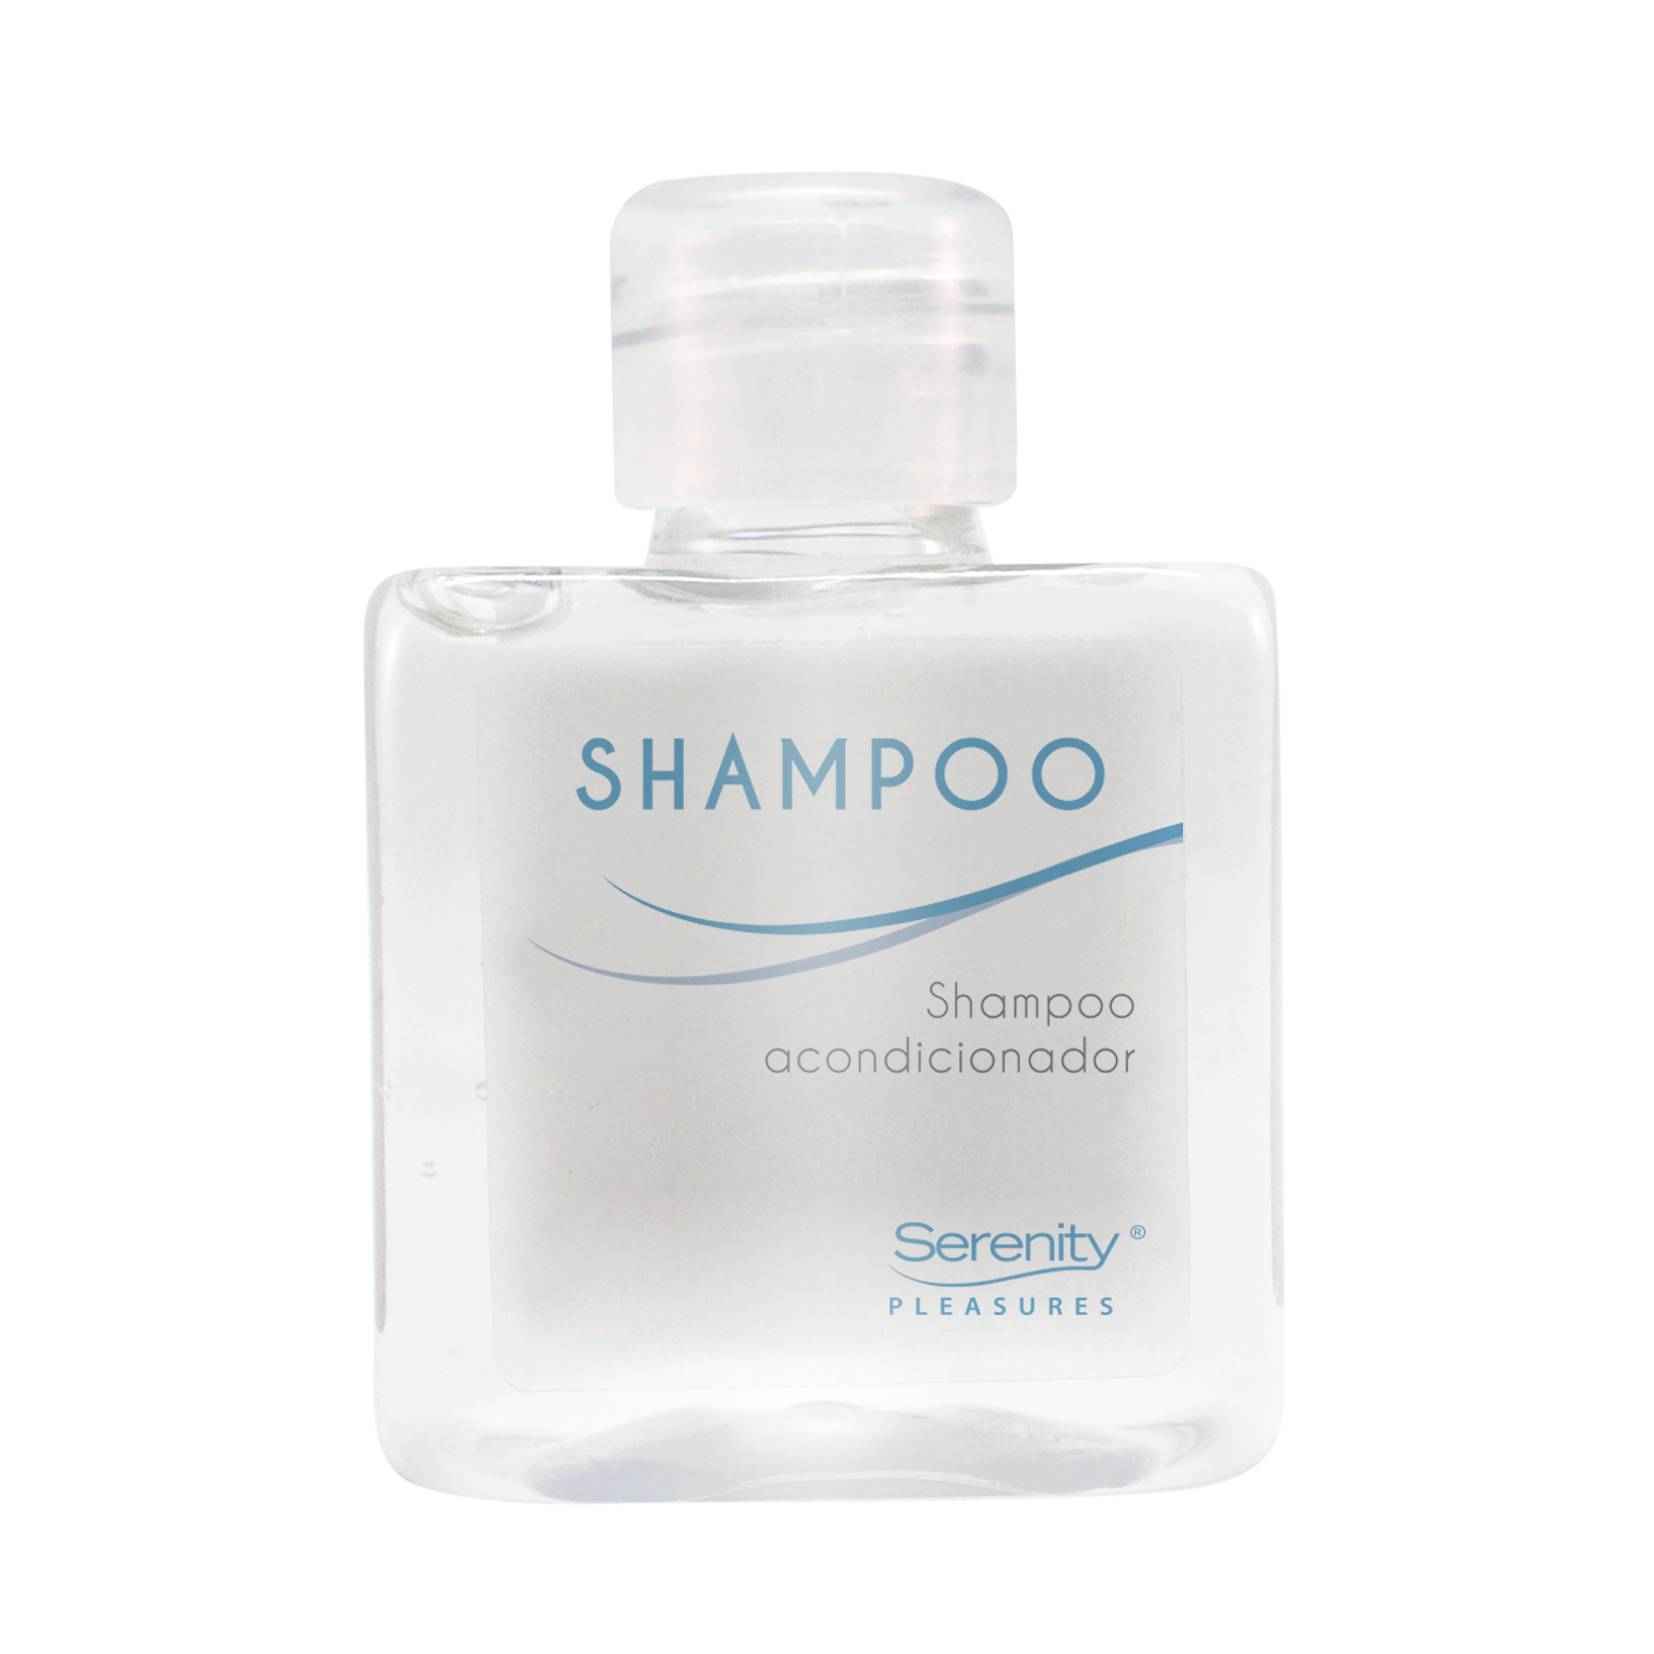 Shampoo acondicionador